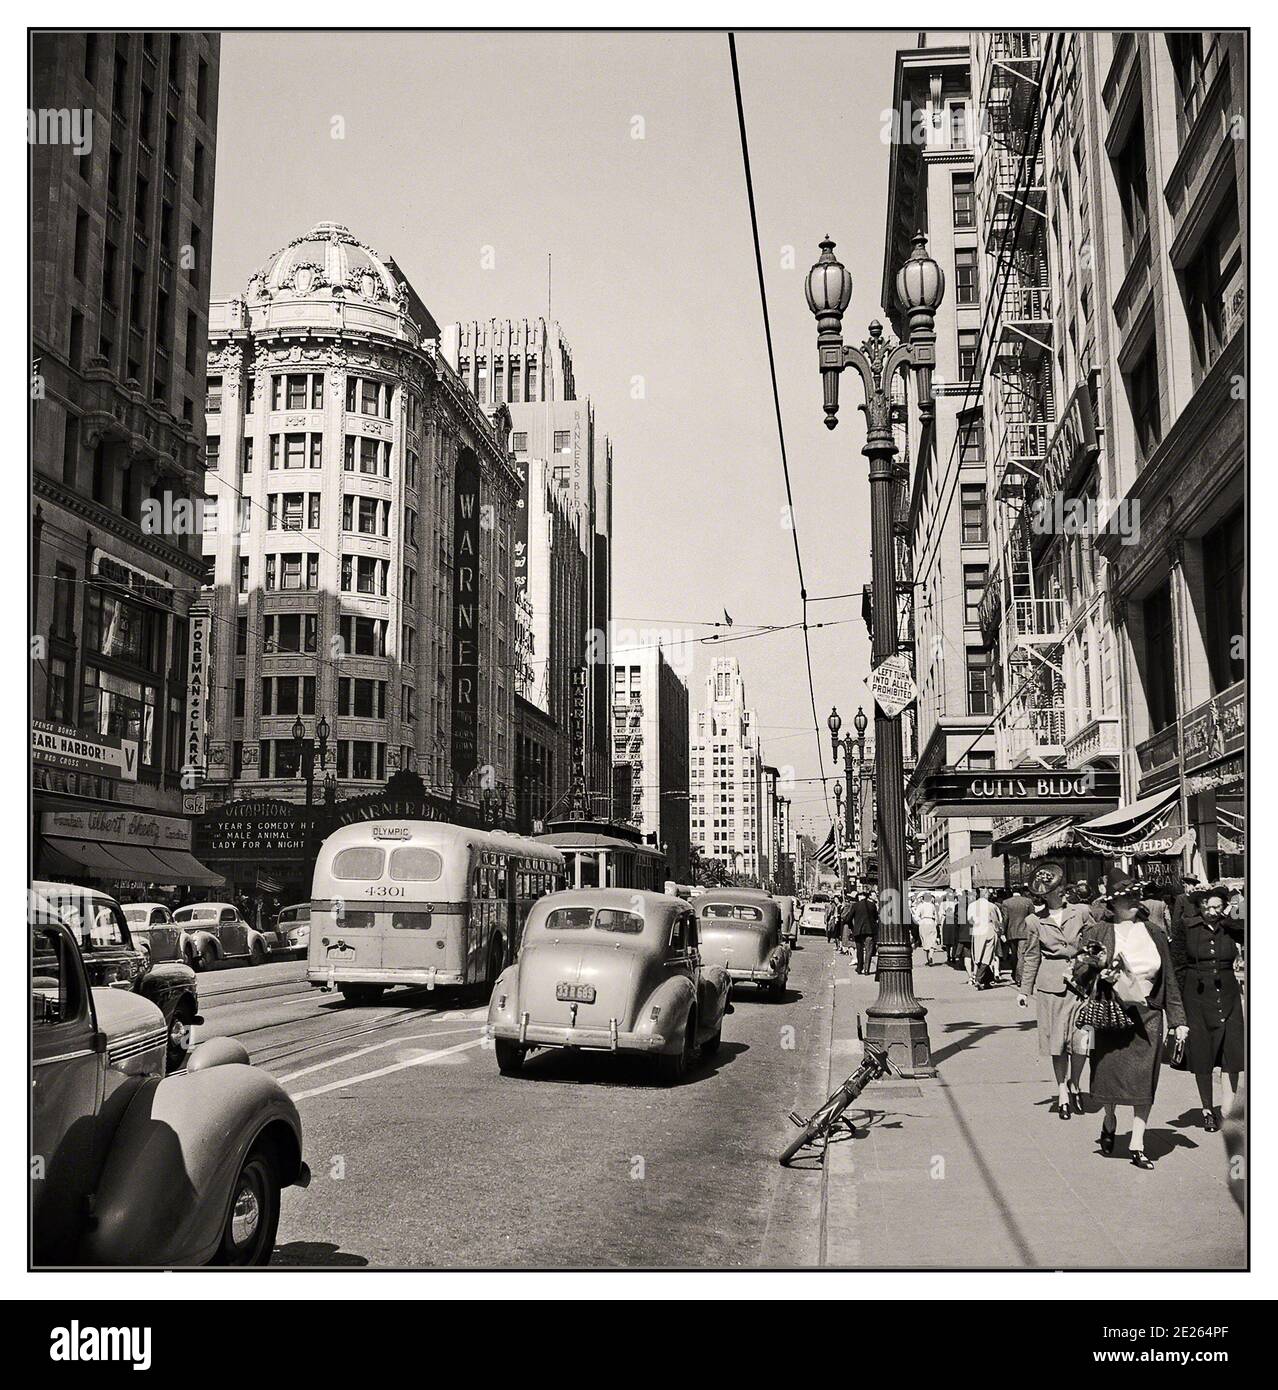 LOS ANGELES USA "South Hill Street, Los Angeles" des années 1940. Photo de Russell Lee pour Office of War information. Avril 1942. Banque D'Images